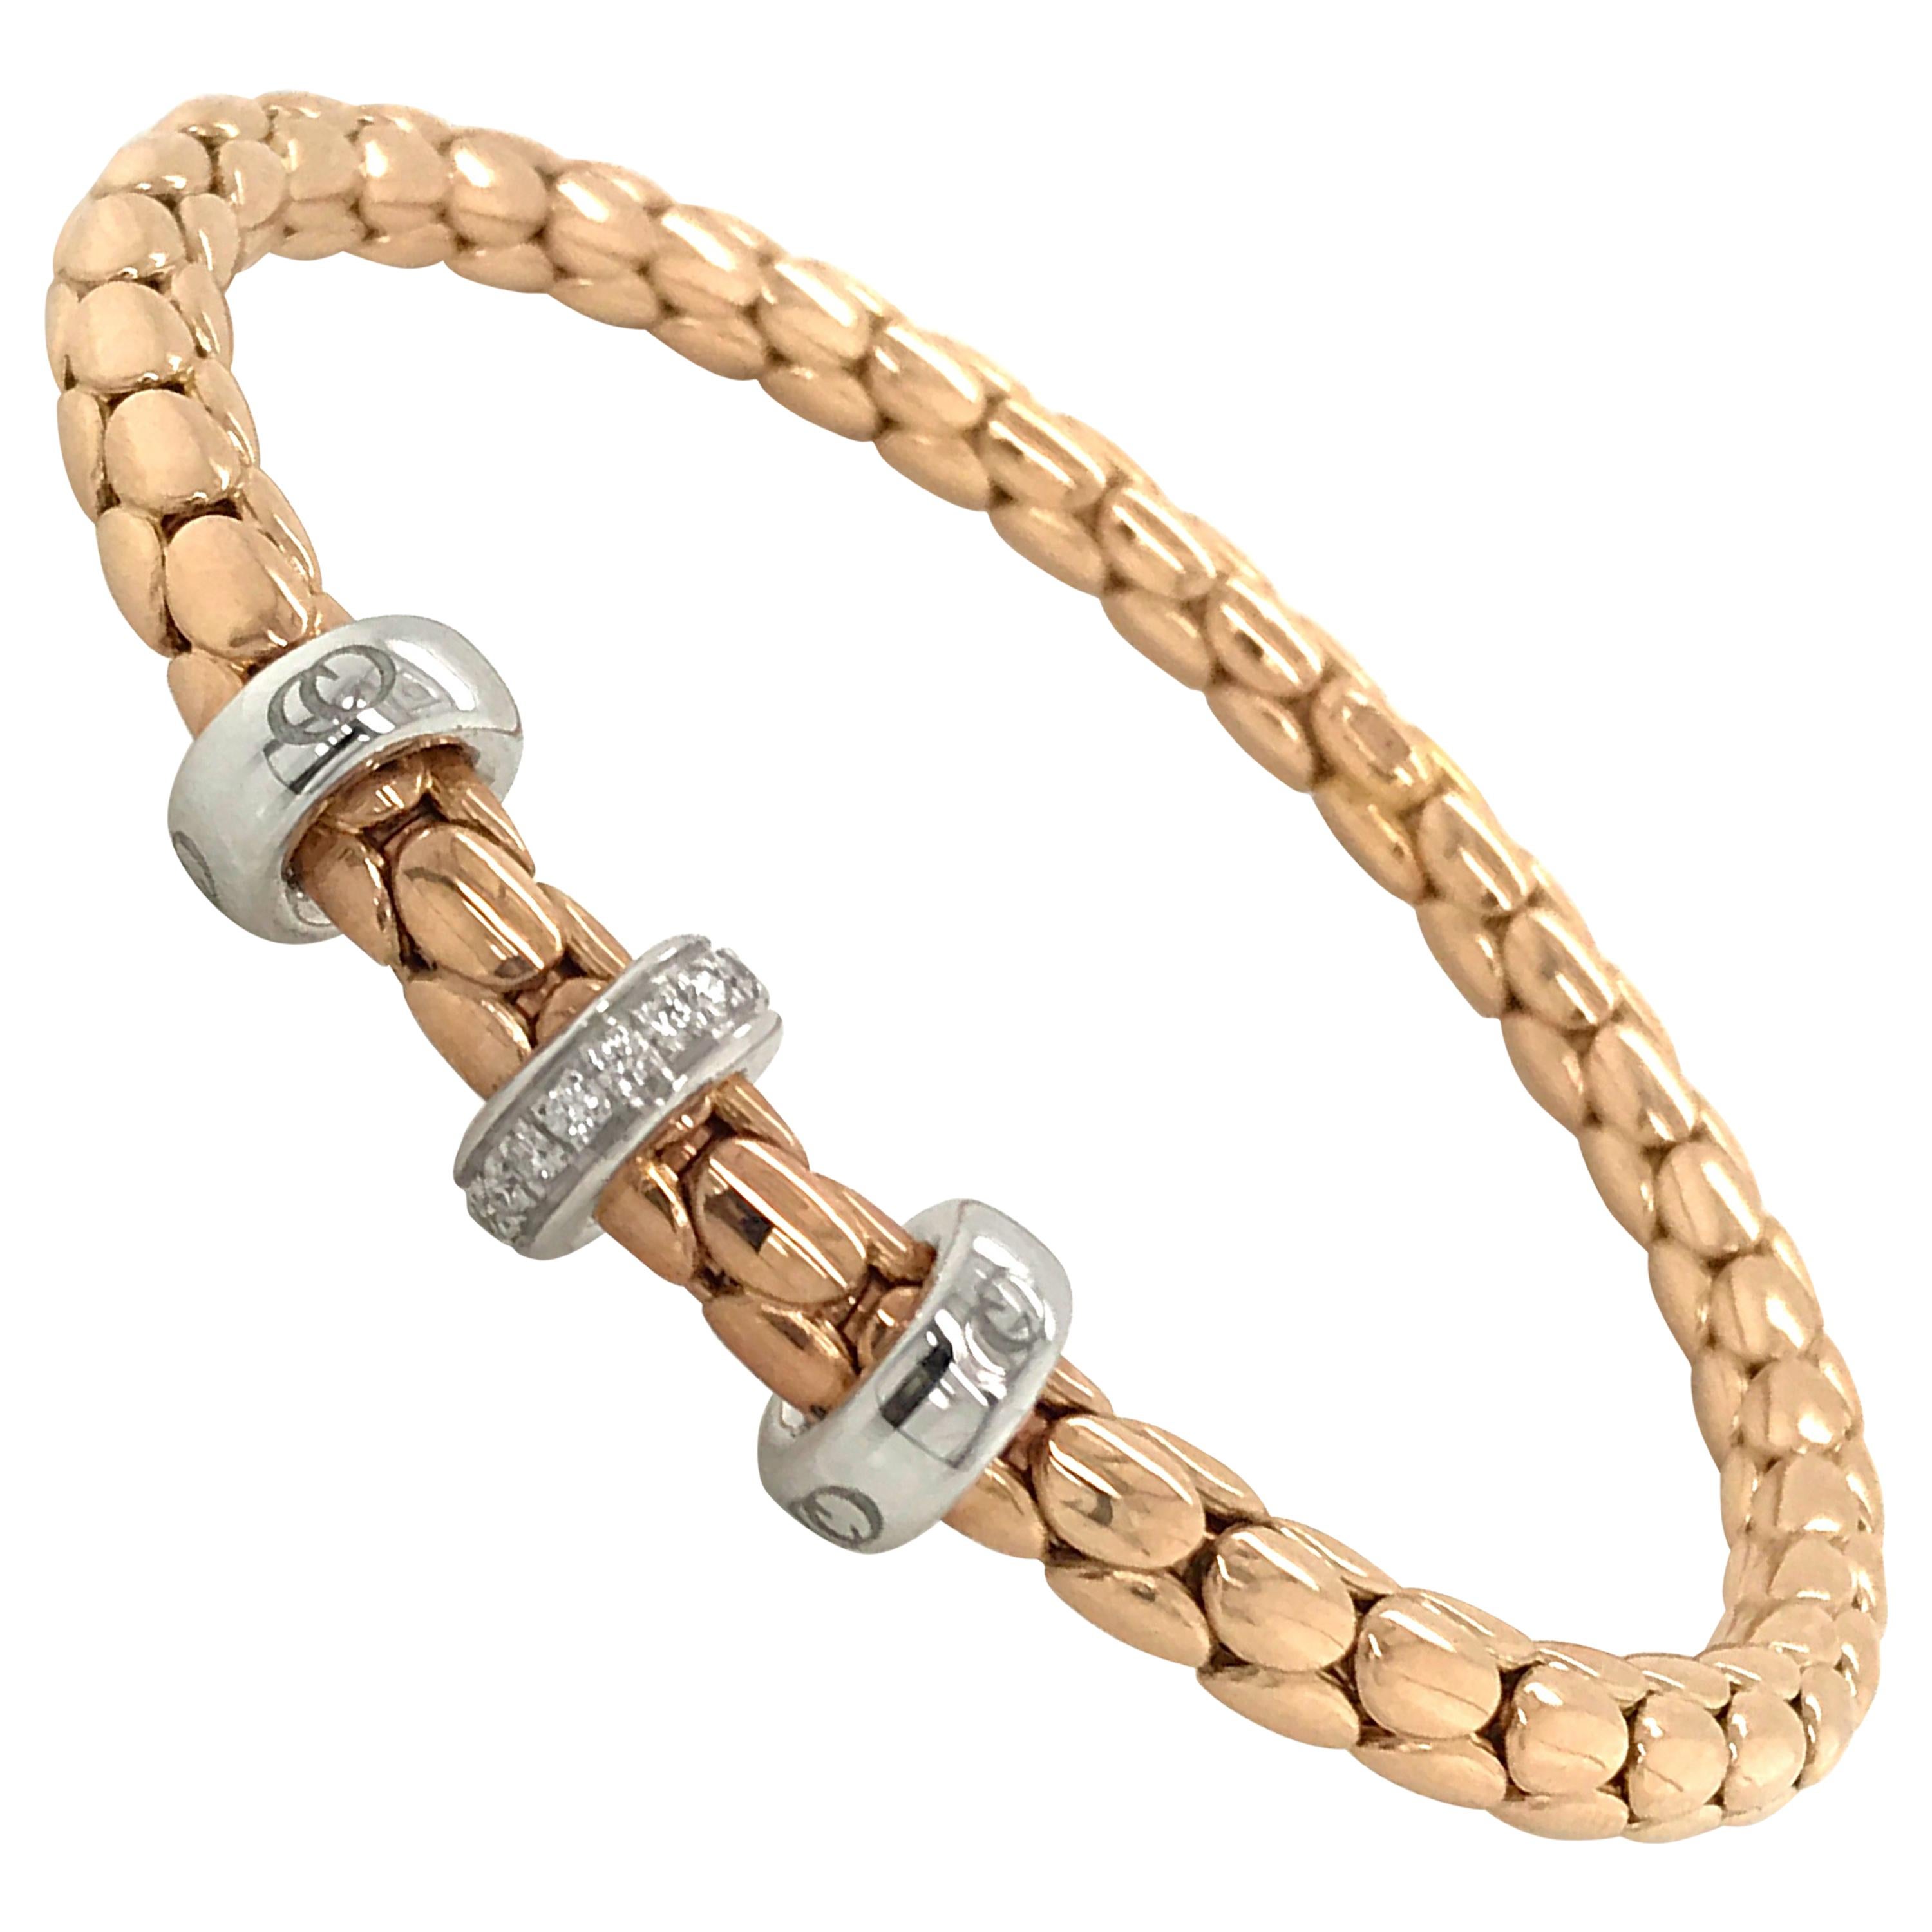 Pink Gold and White Gold 18 Karat Timeless Stretch Bracelet with Diamonds